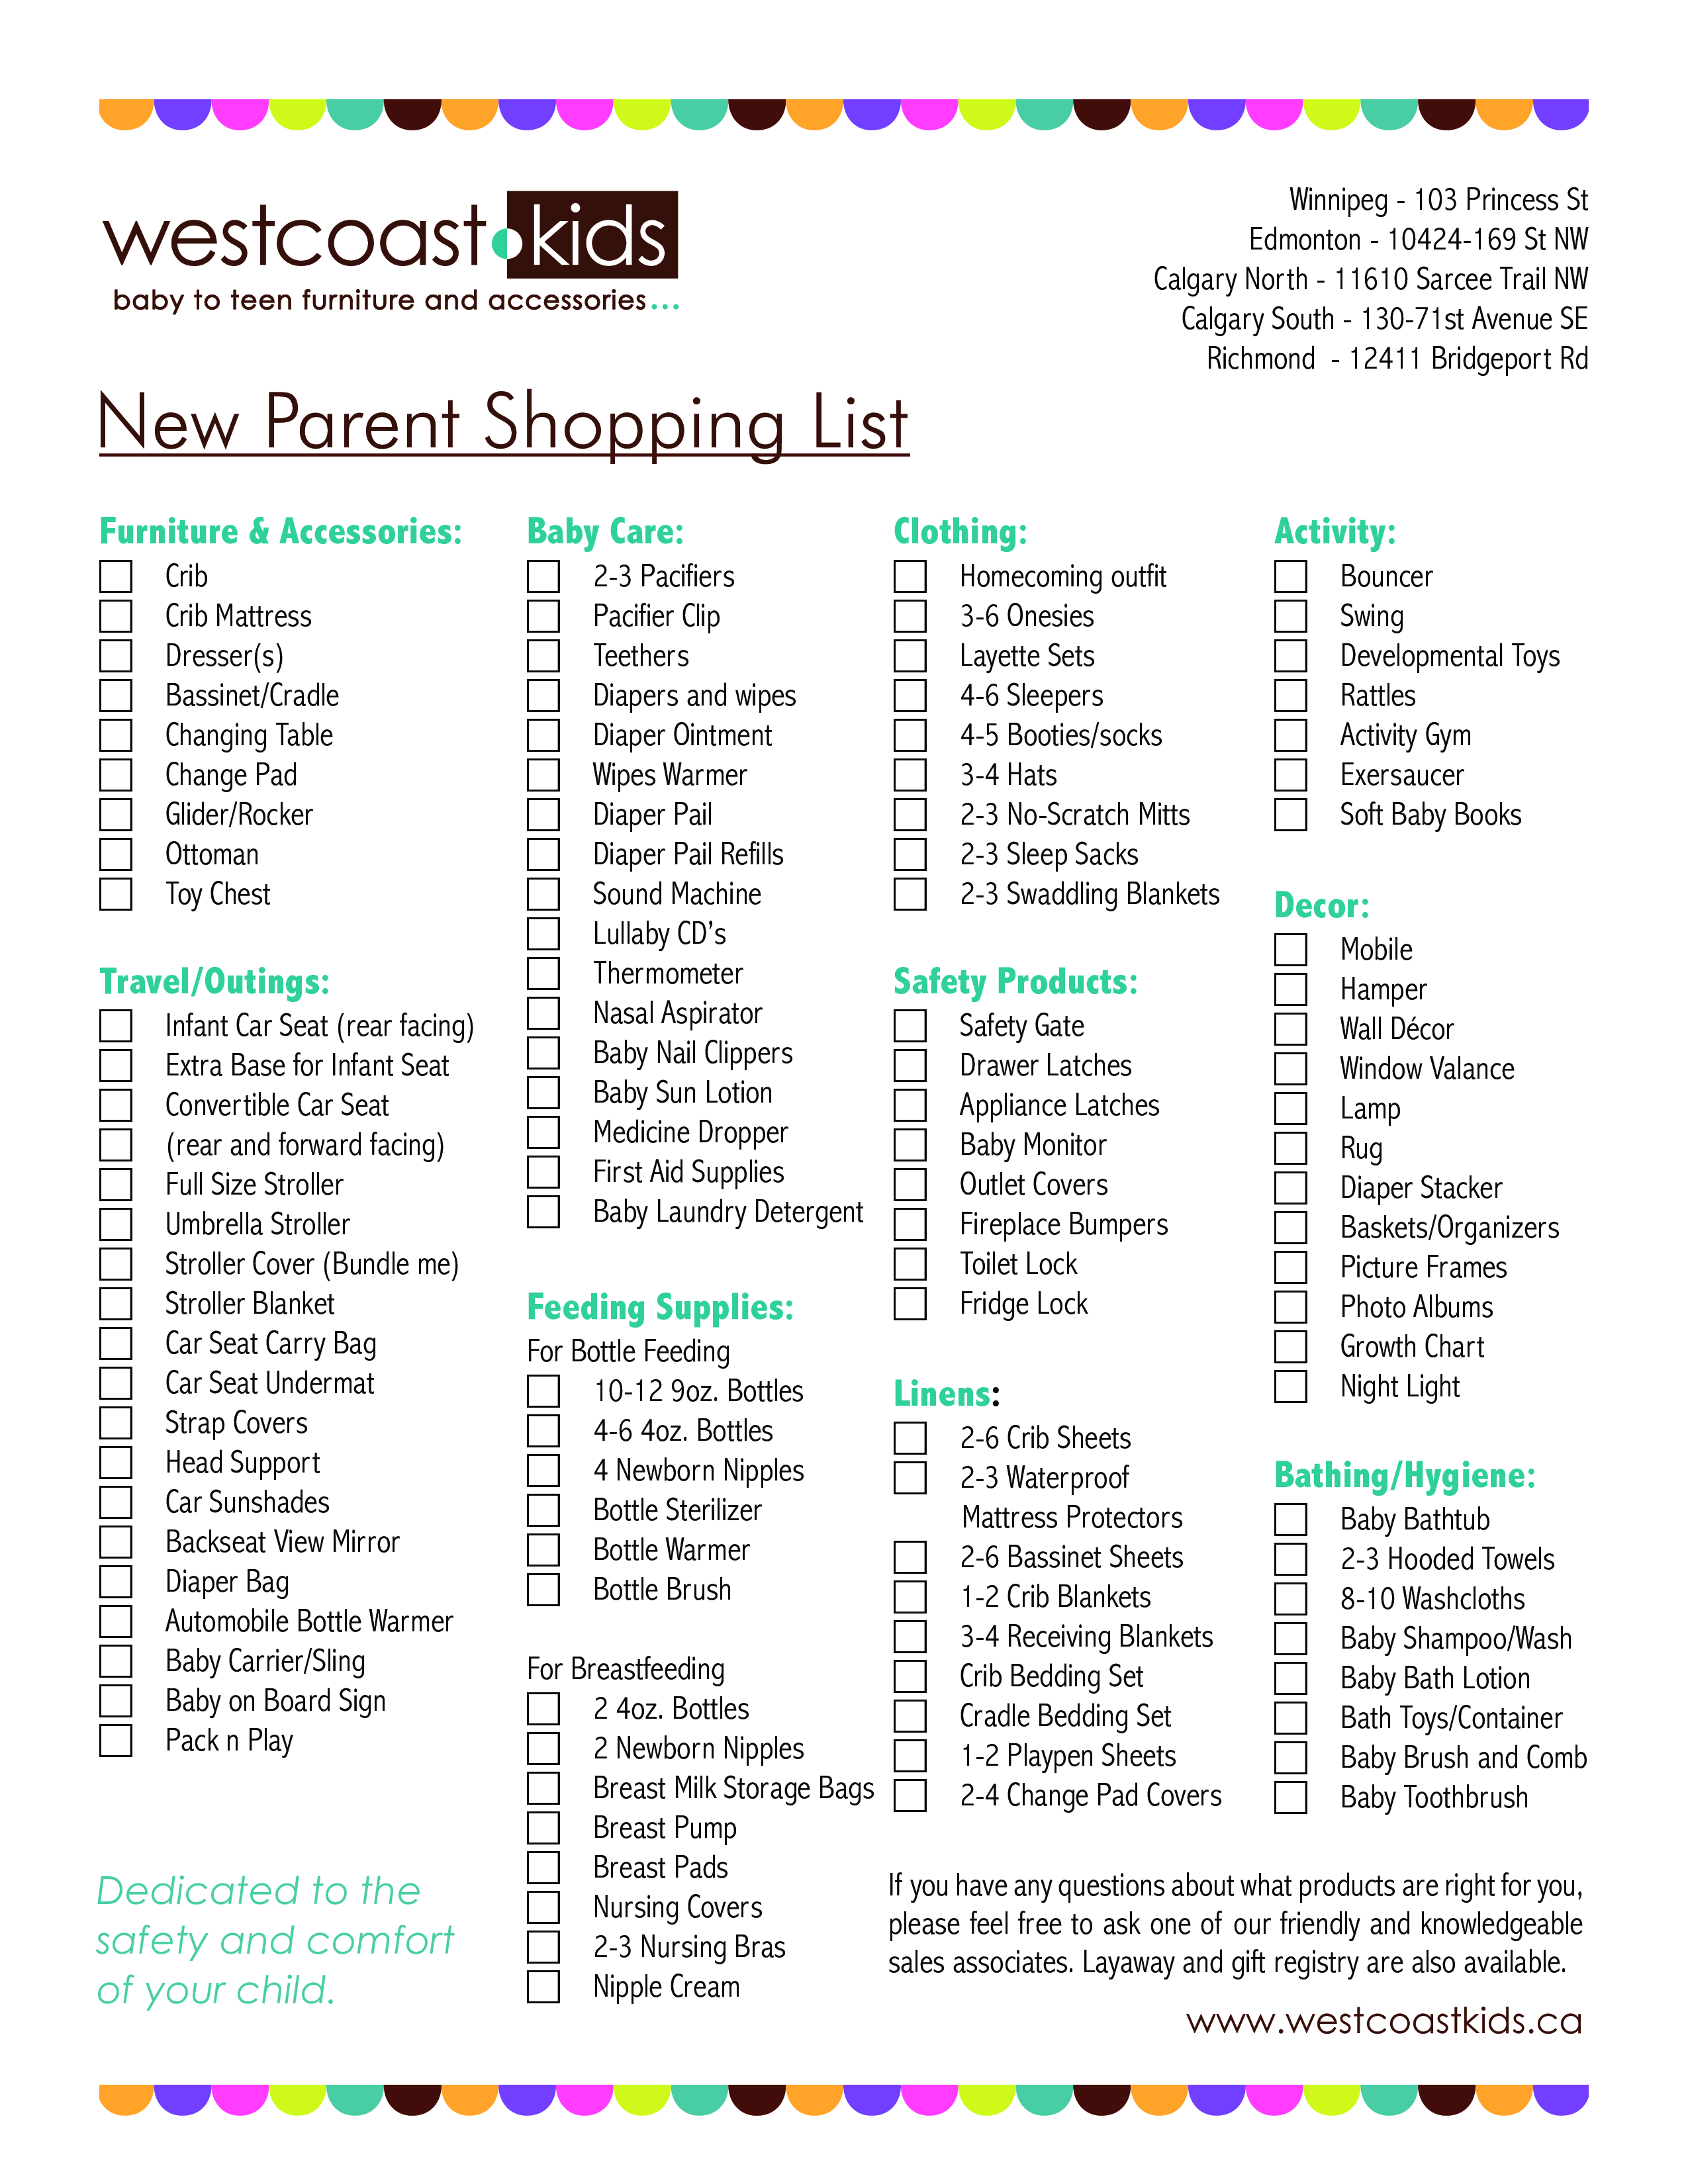 new baby shopping checklist plantilla imagen principal